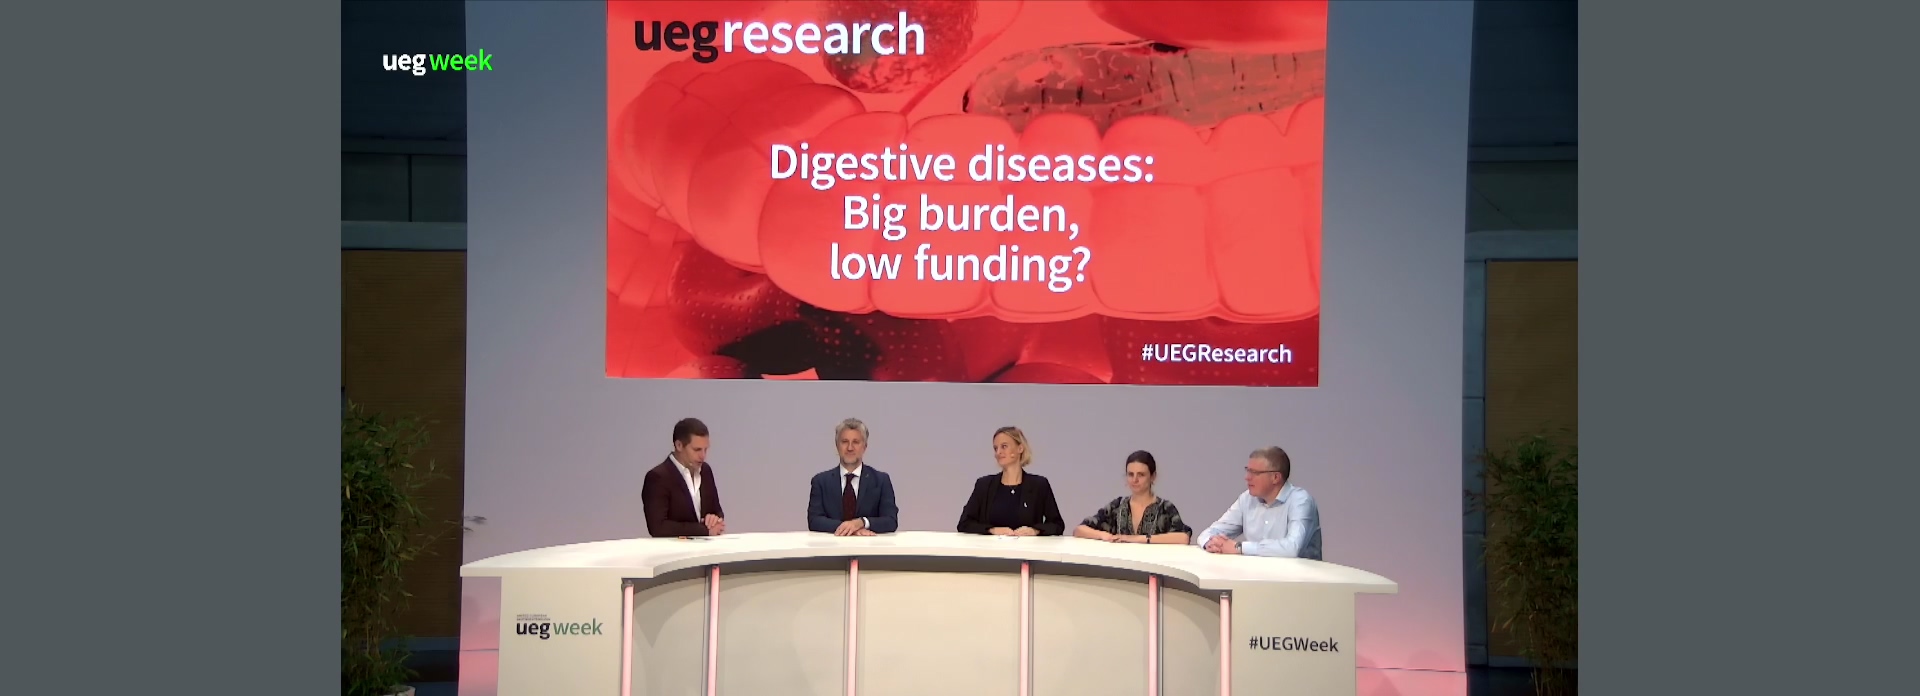 Digestive diseases: Big burden, low funding?